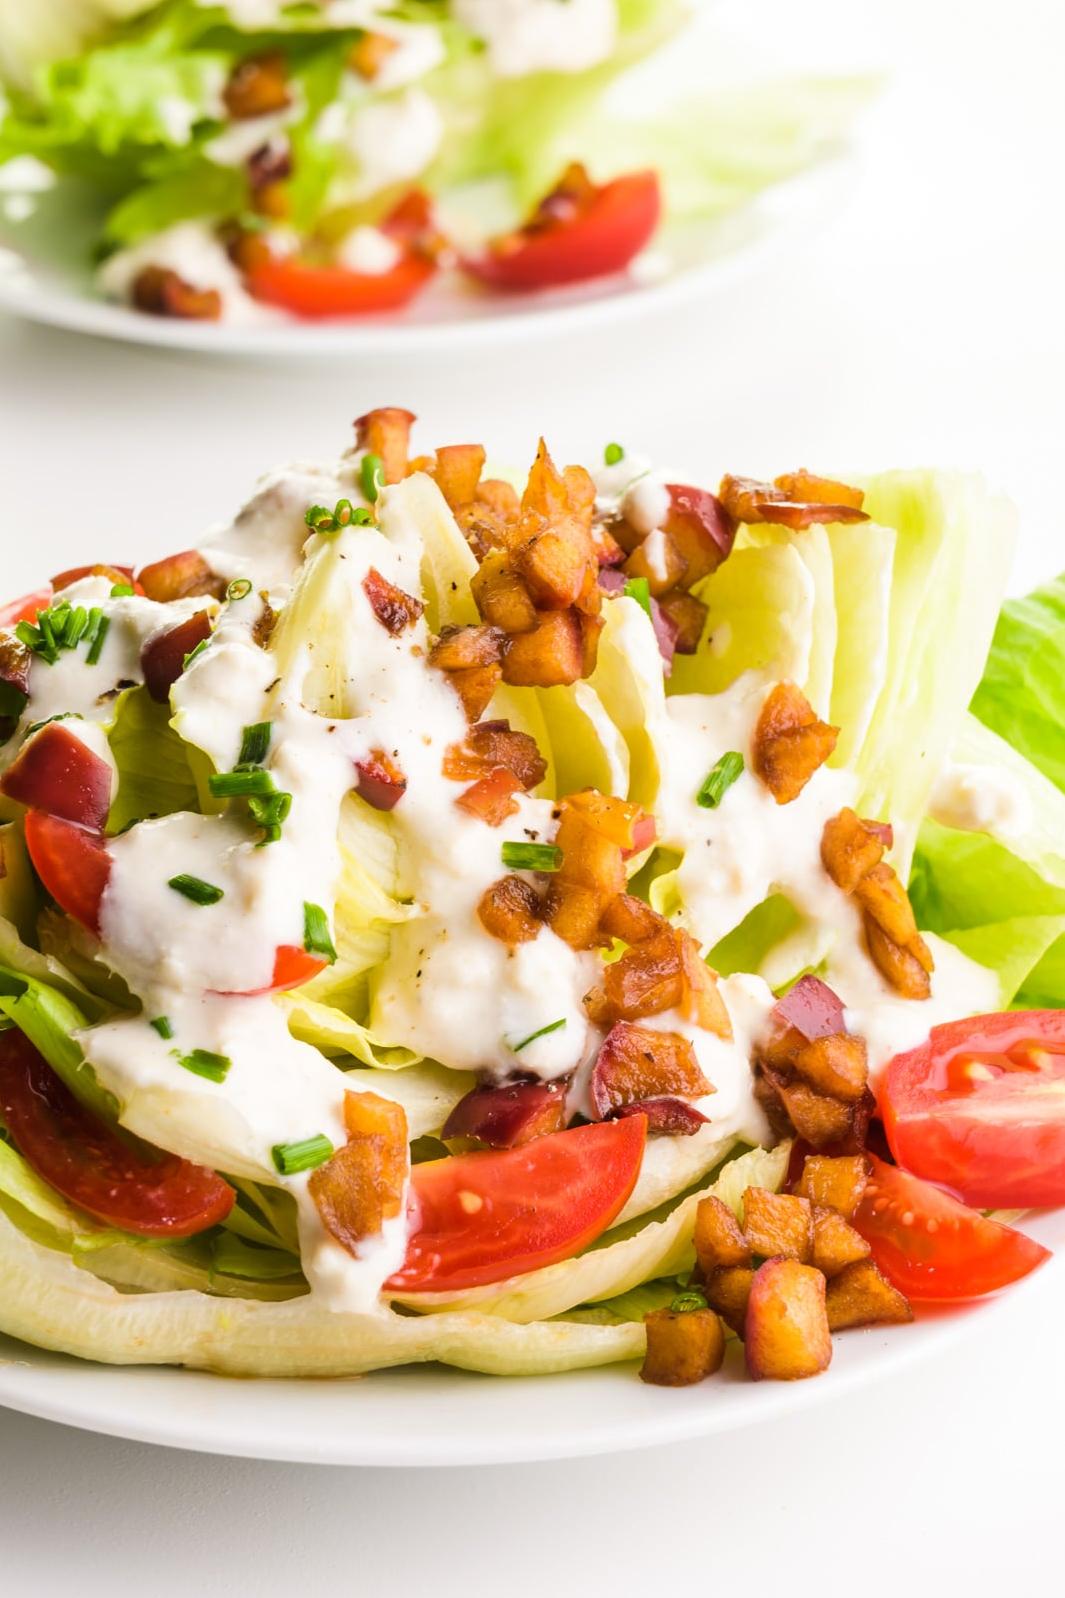  A refreshing twist on a classic salad